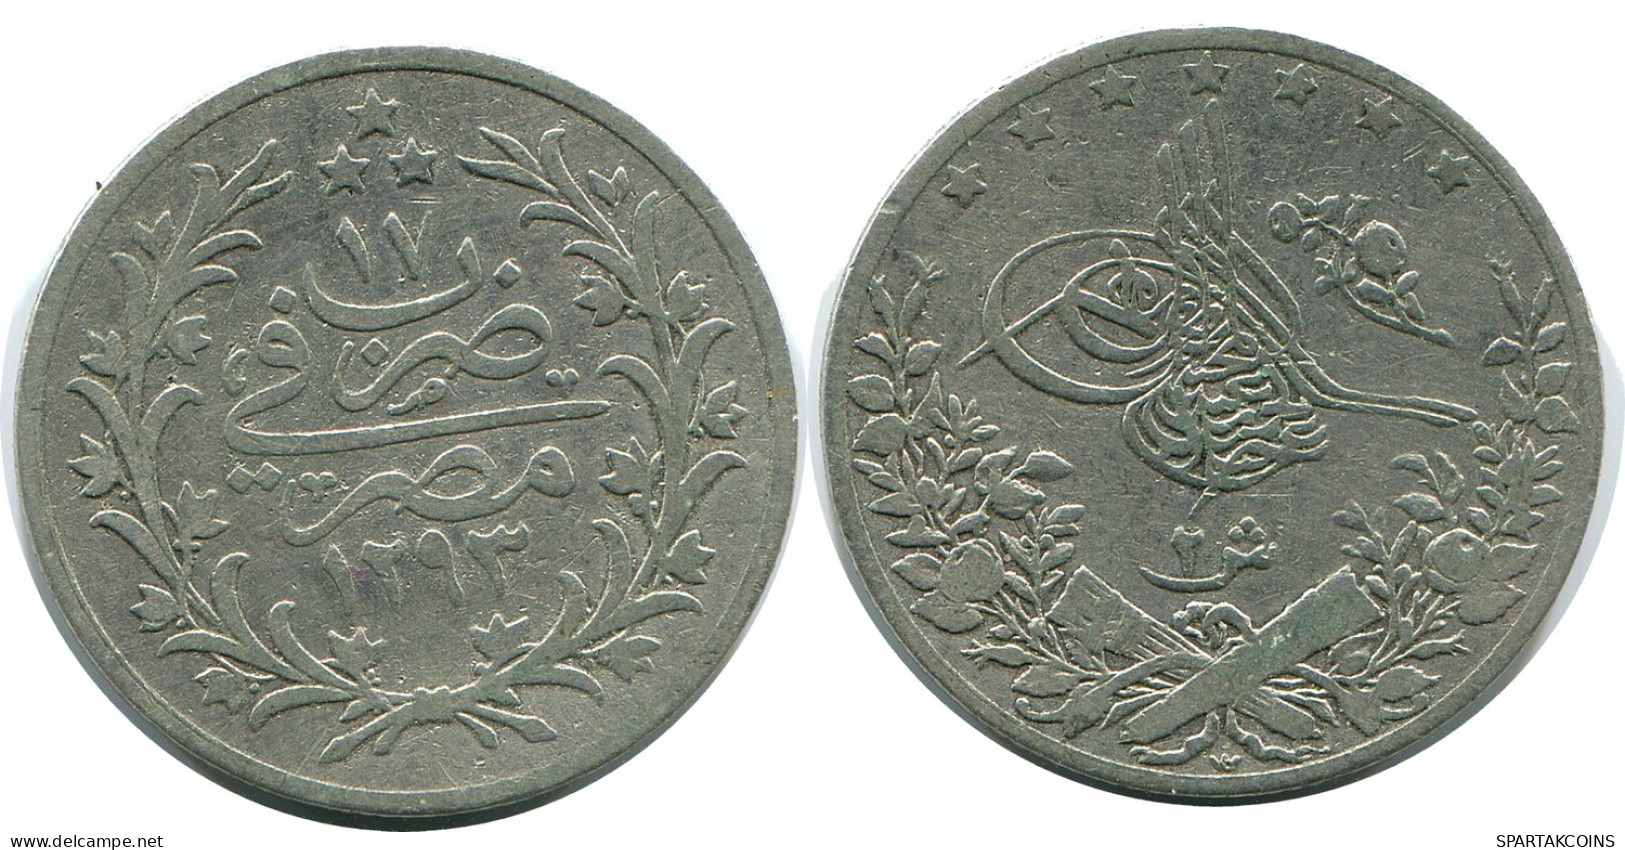 2 QIRSH 1891 EGYPT Islamic Coin #AH284.10.U - Egypt